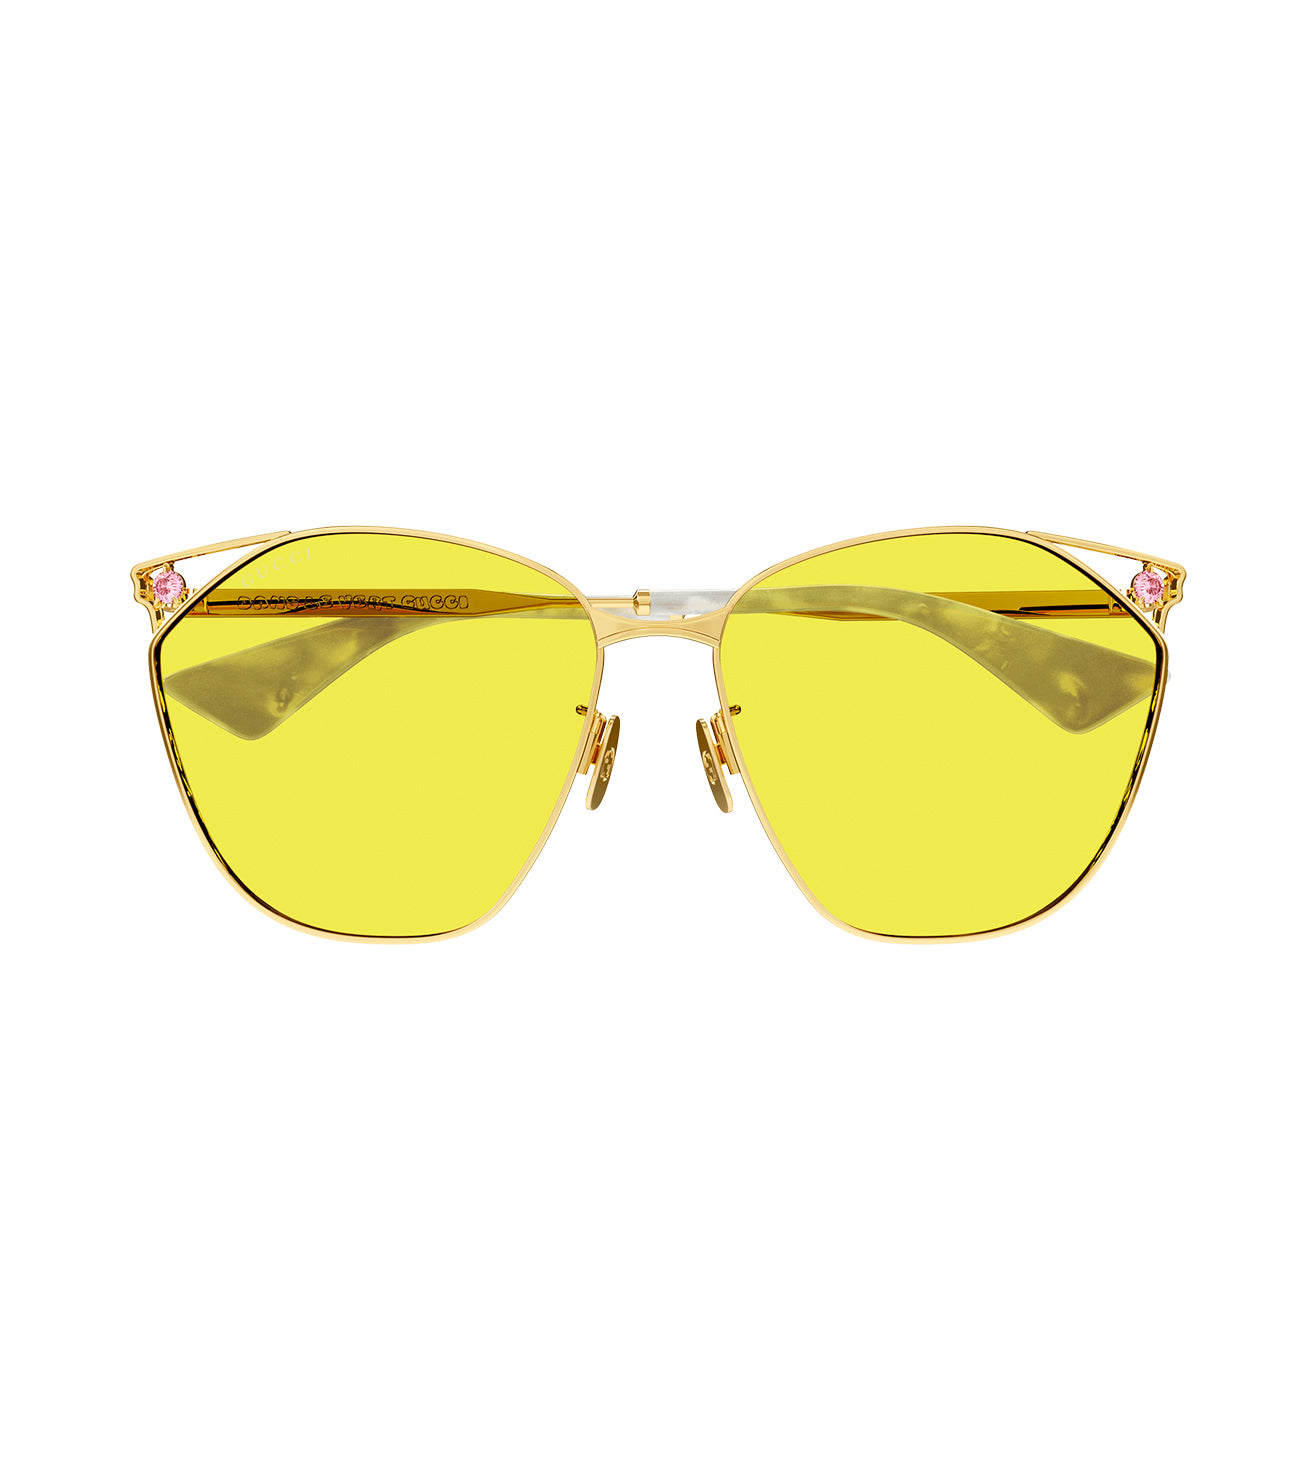 Gucci Women's Yellow Butterfly Sunglasses